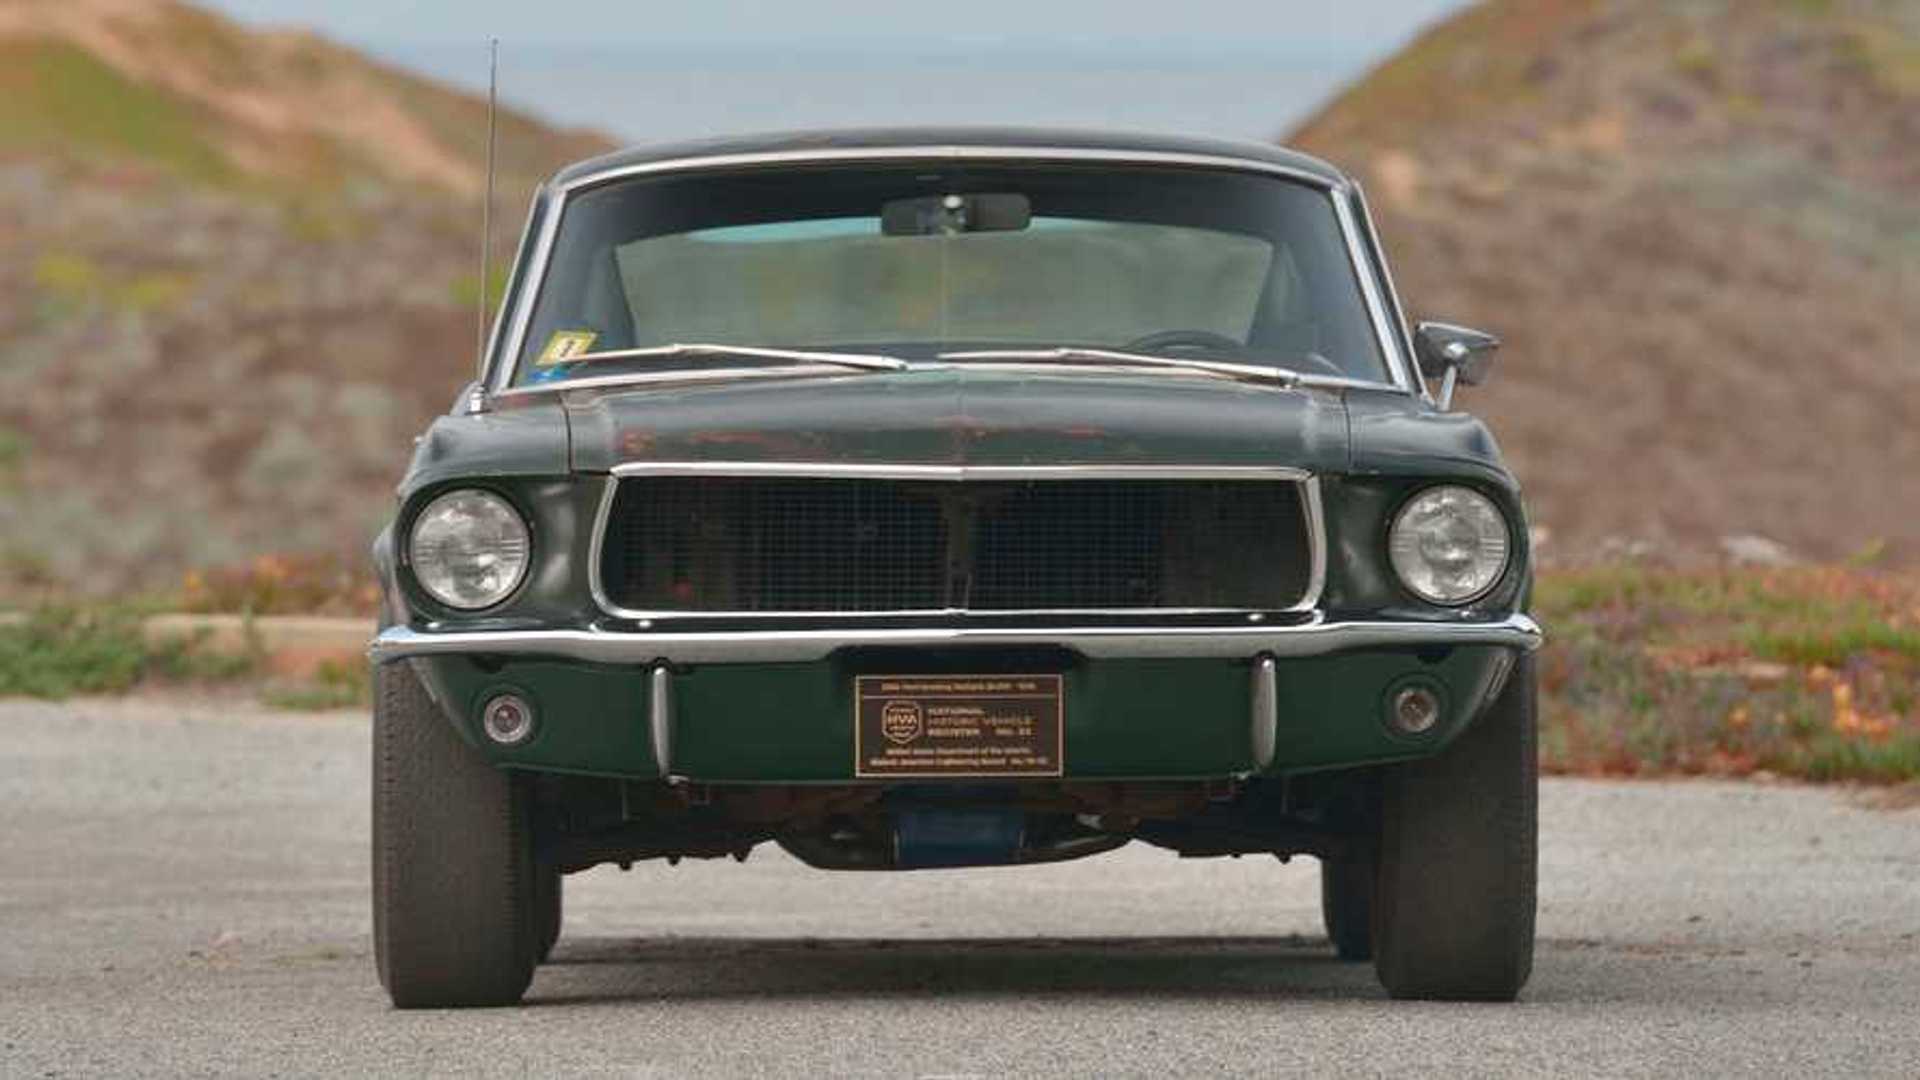 1968 Mustang GT featured in Bullitt movie